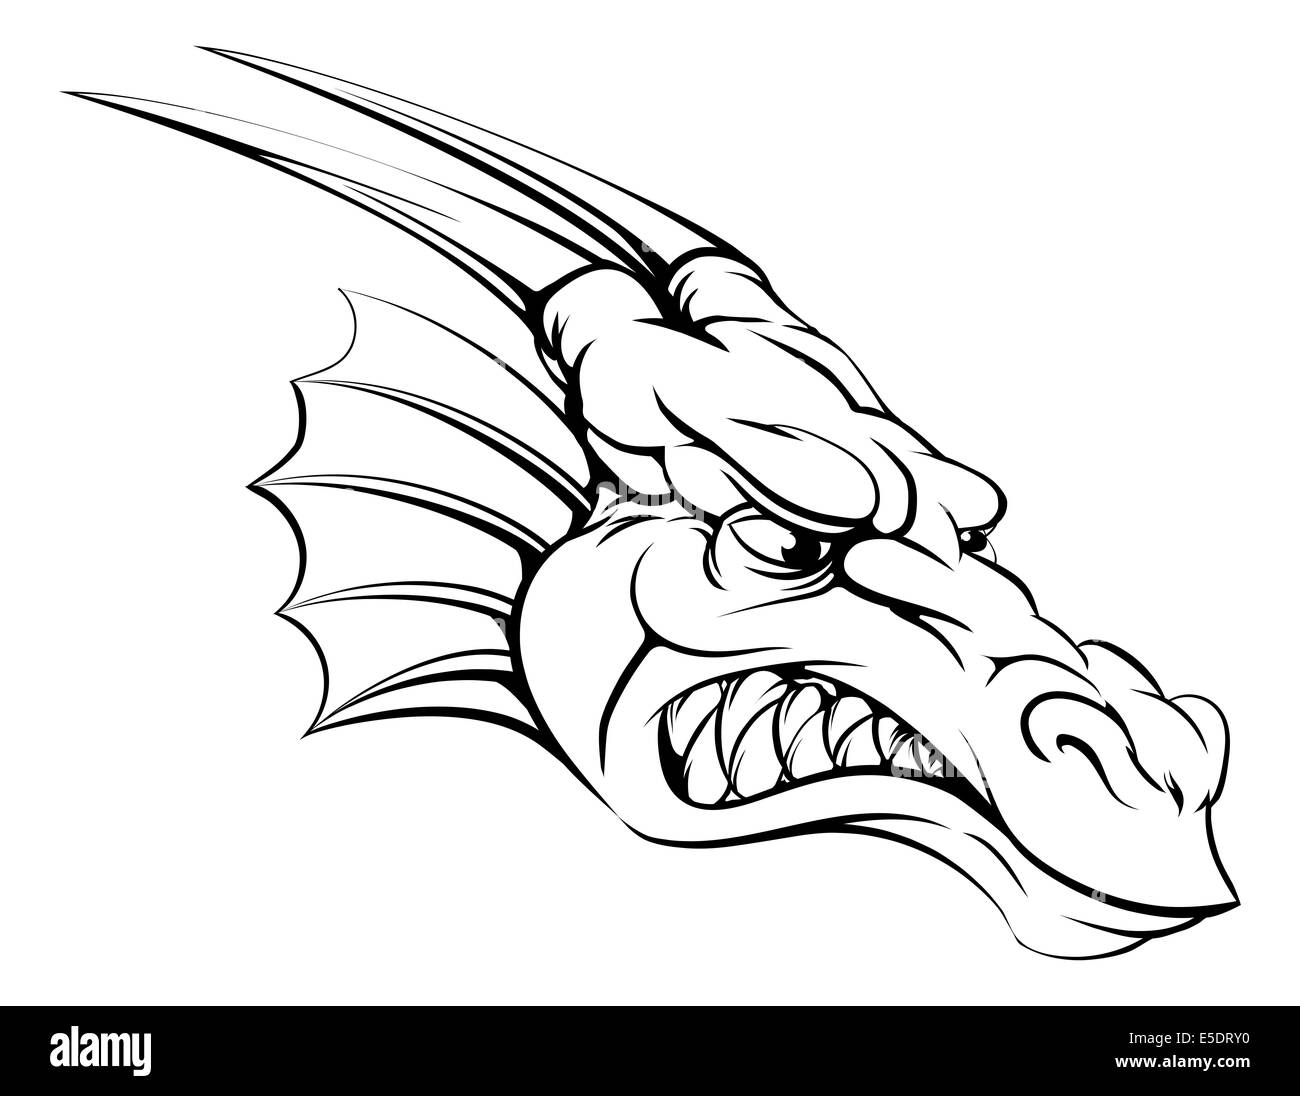 A drawing of a mean tough dragon mascot head Stock Photo